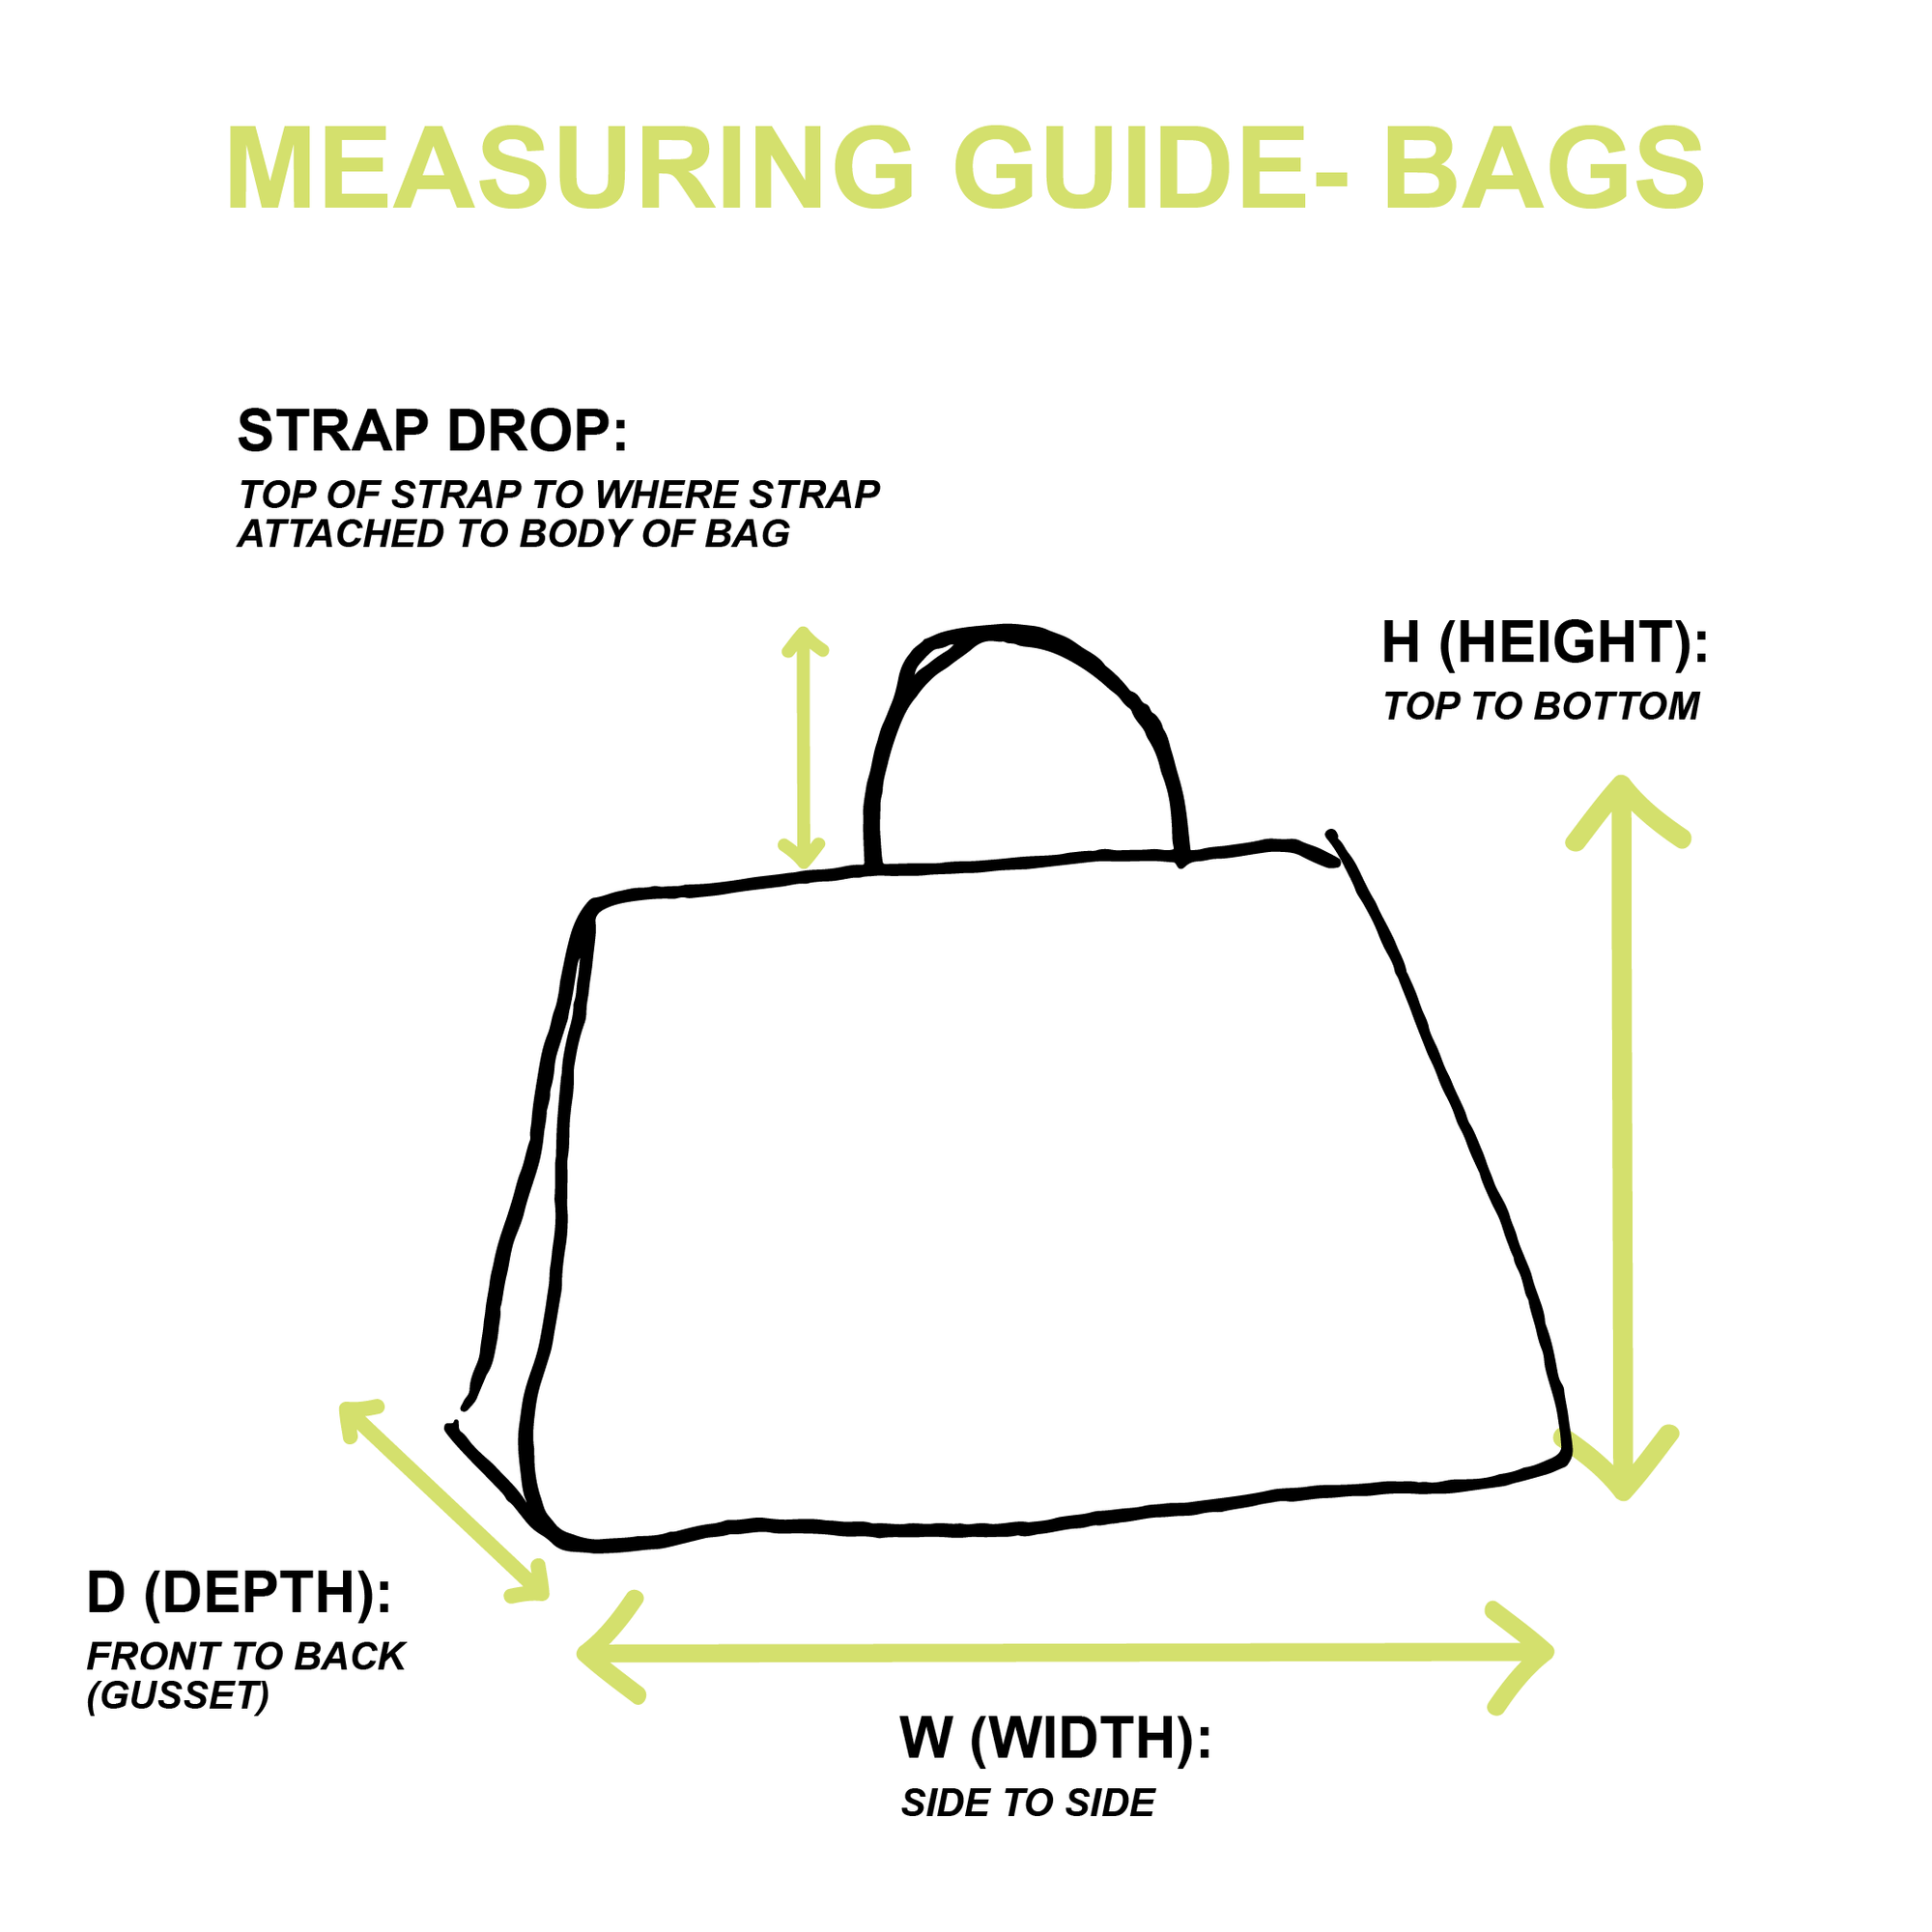 Fendi Micro Snakeskin Top Handle Bag - Handbags